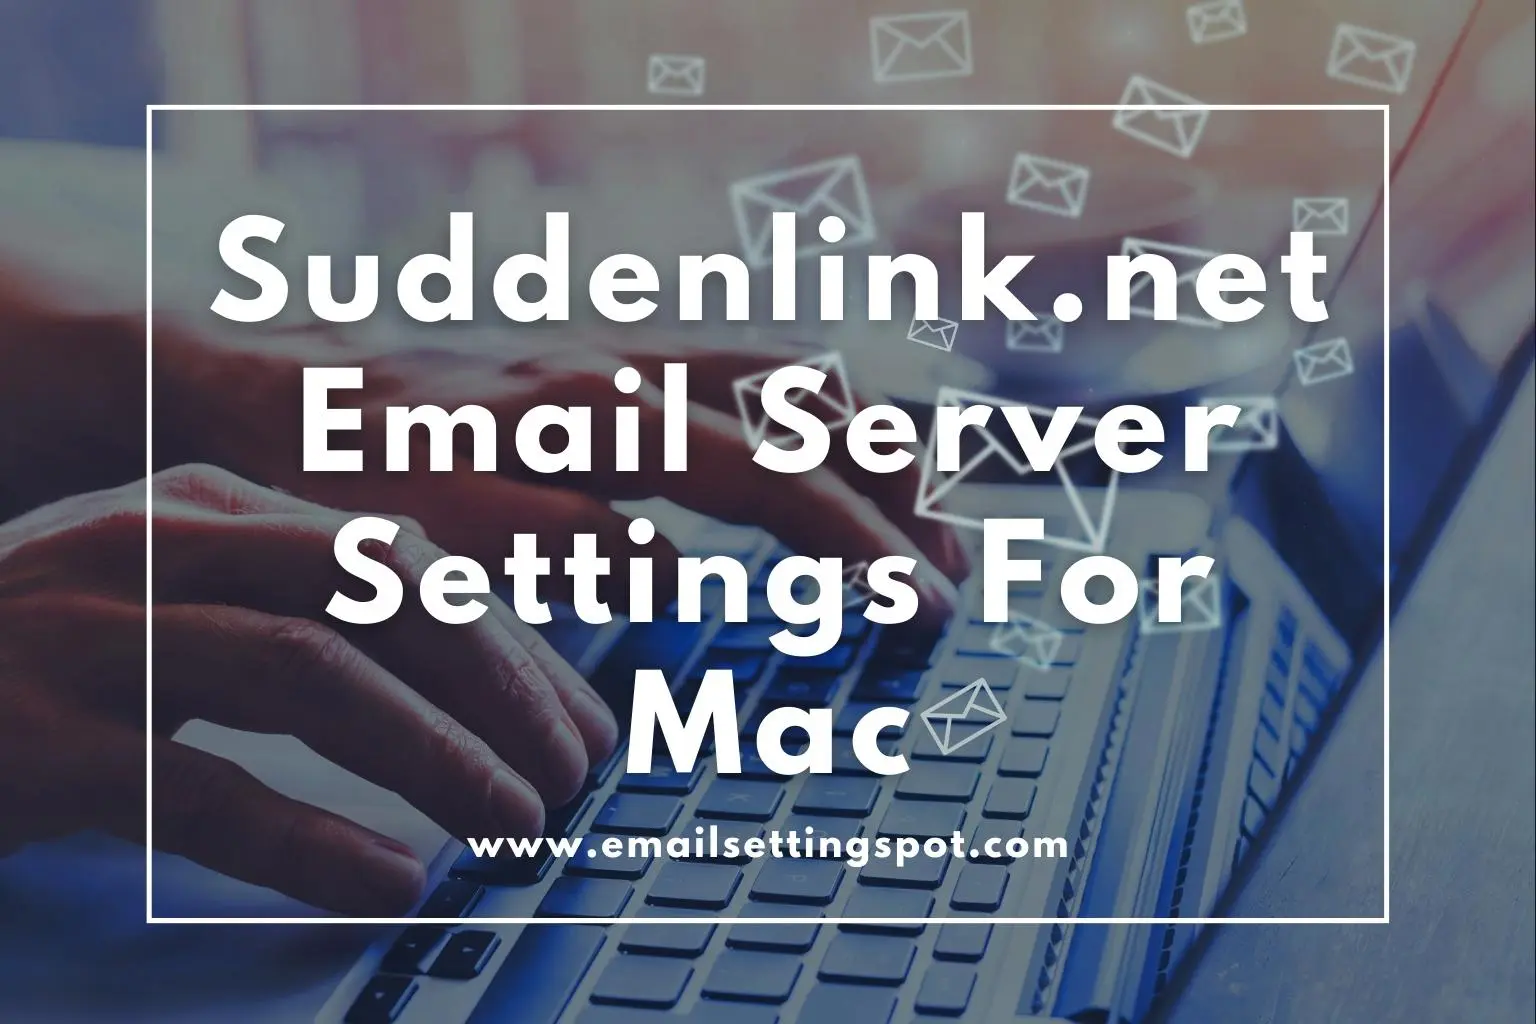 suddenlink.net email Settings for Mac